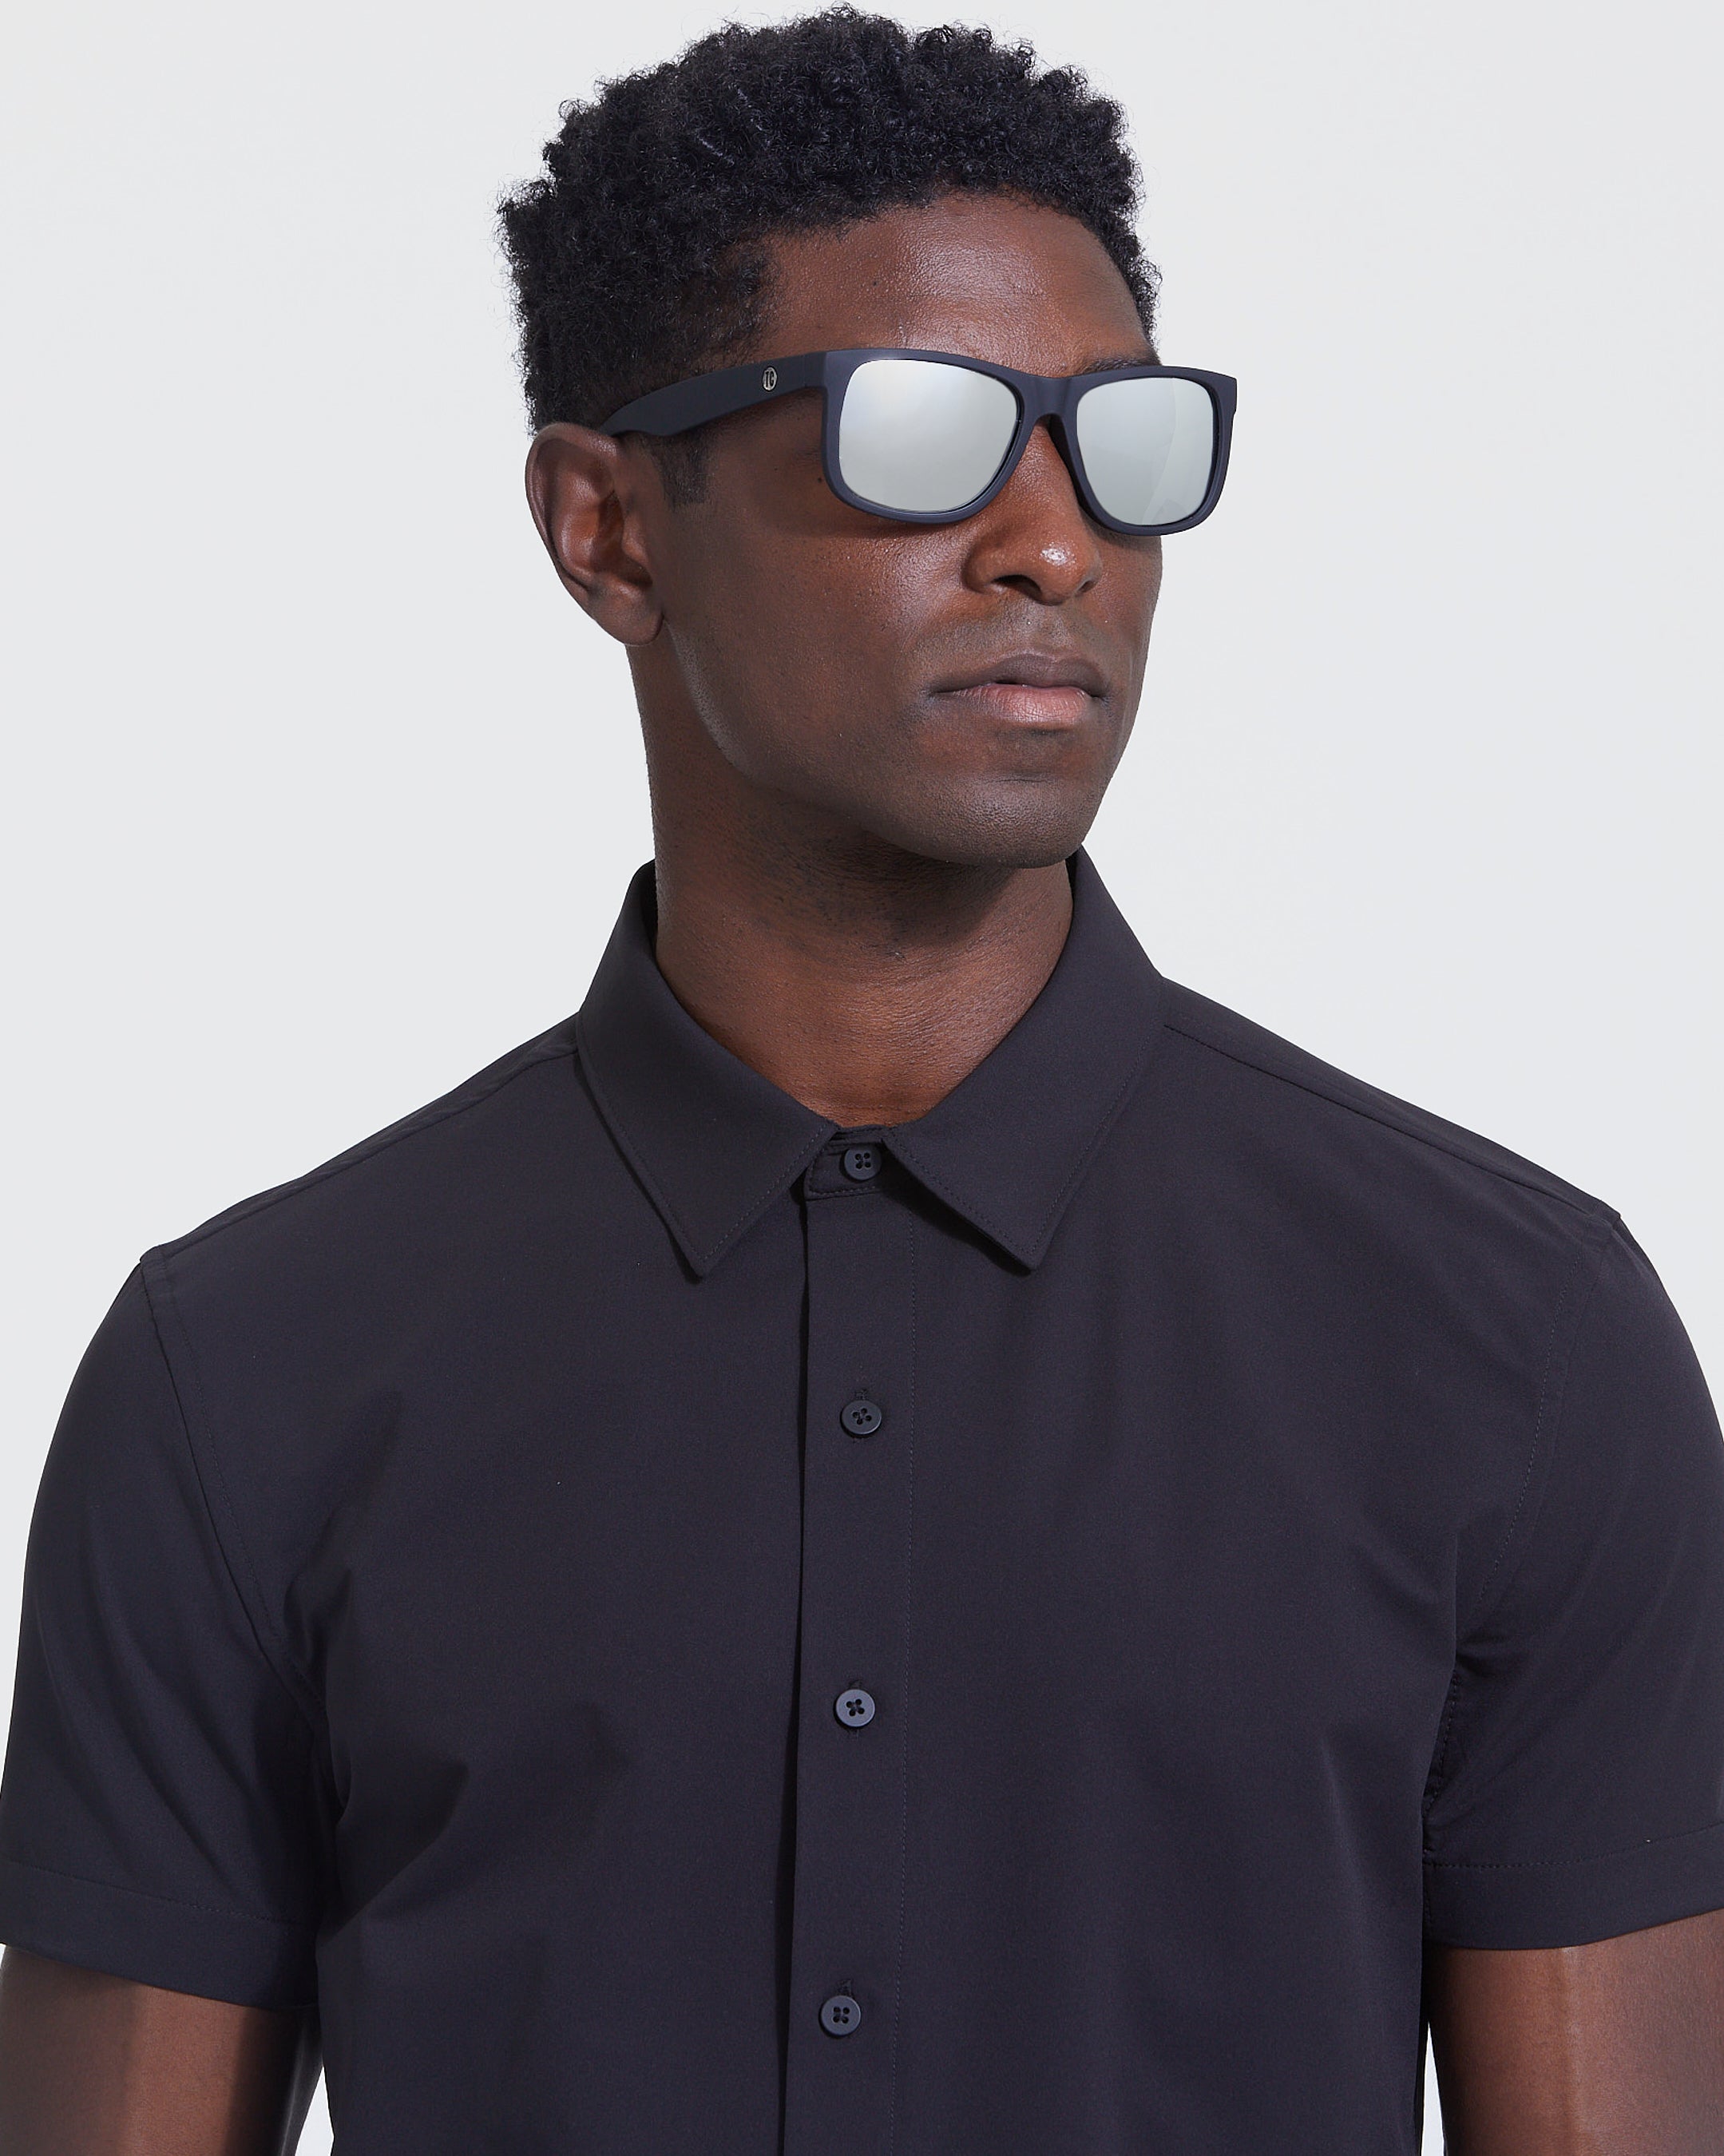 Black Mirror Classic Polarized Sunglasses – True Classic